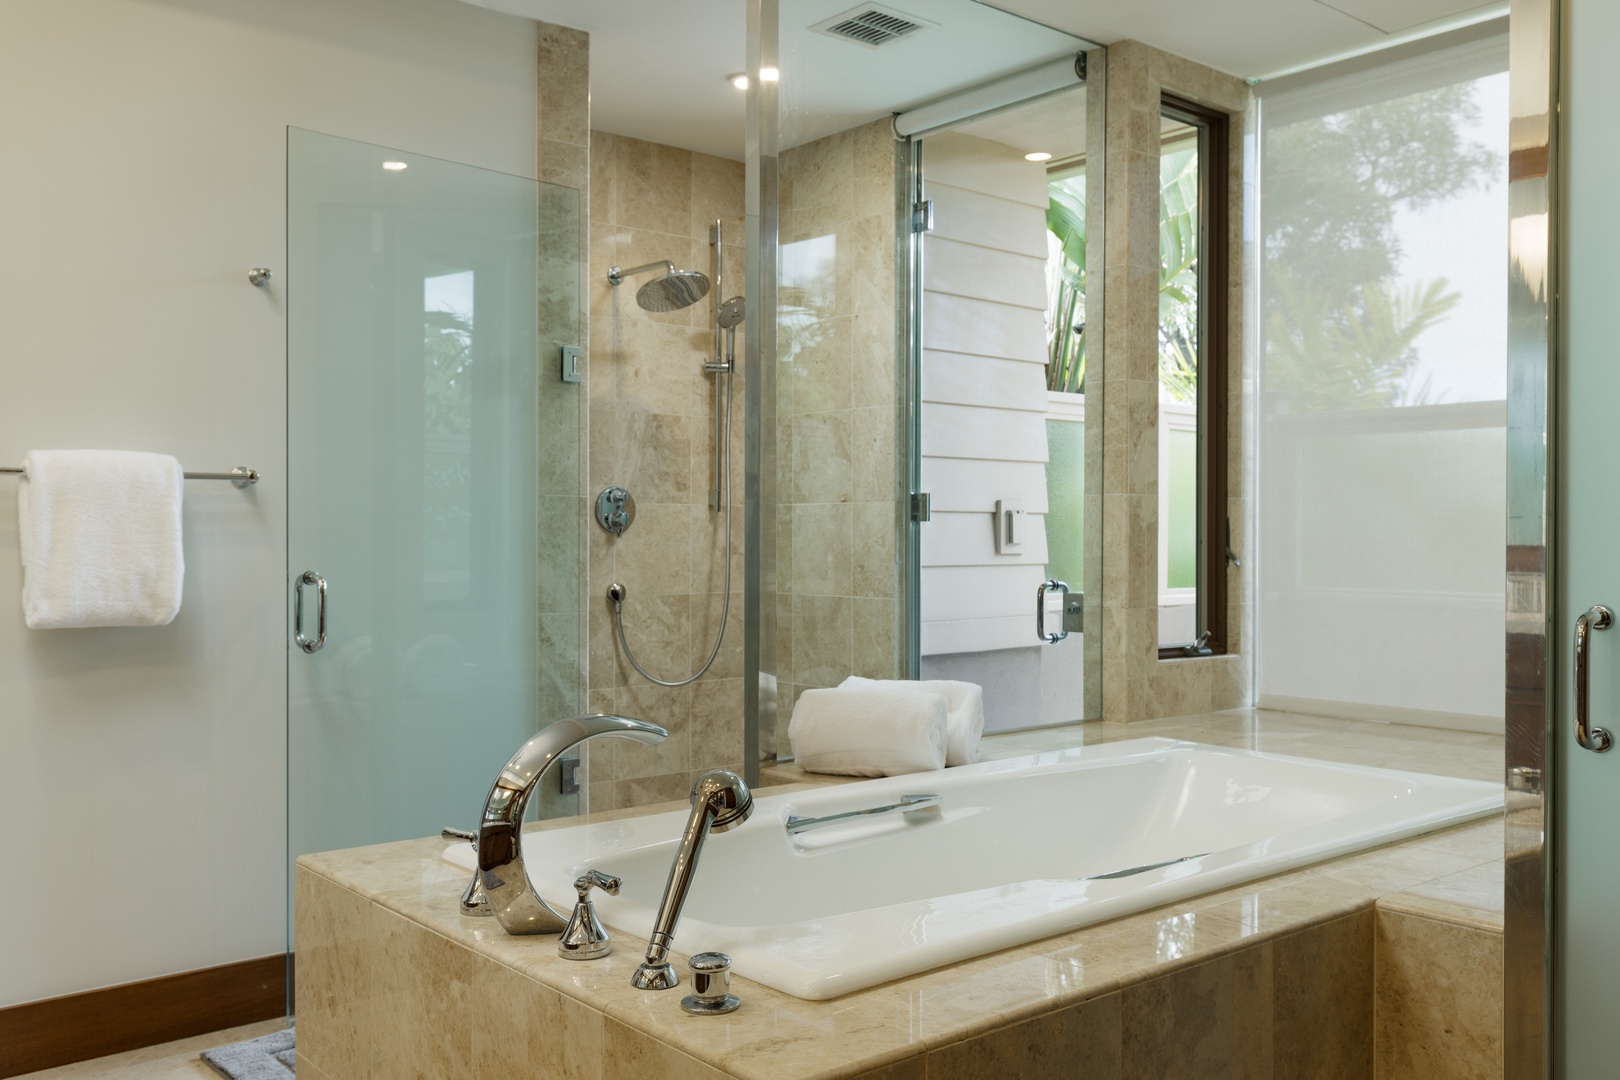 Kailua Kona Vacation Rentals, Fairway Villa 104A - Ensuite bathroom with a large soaking tub.